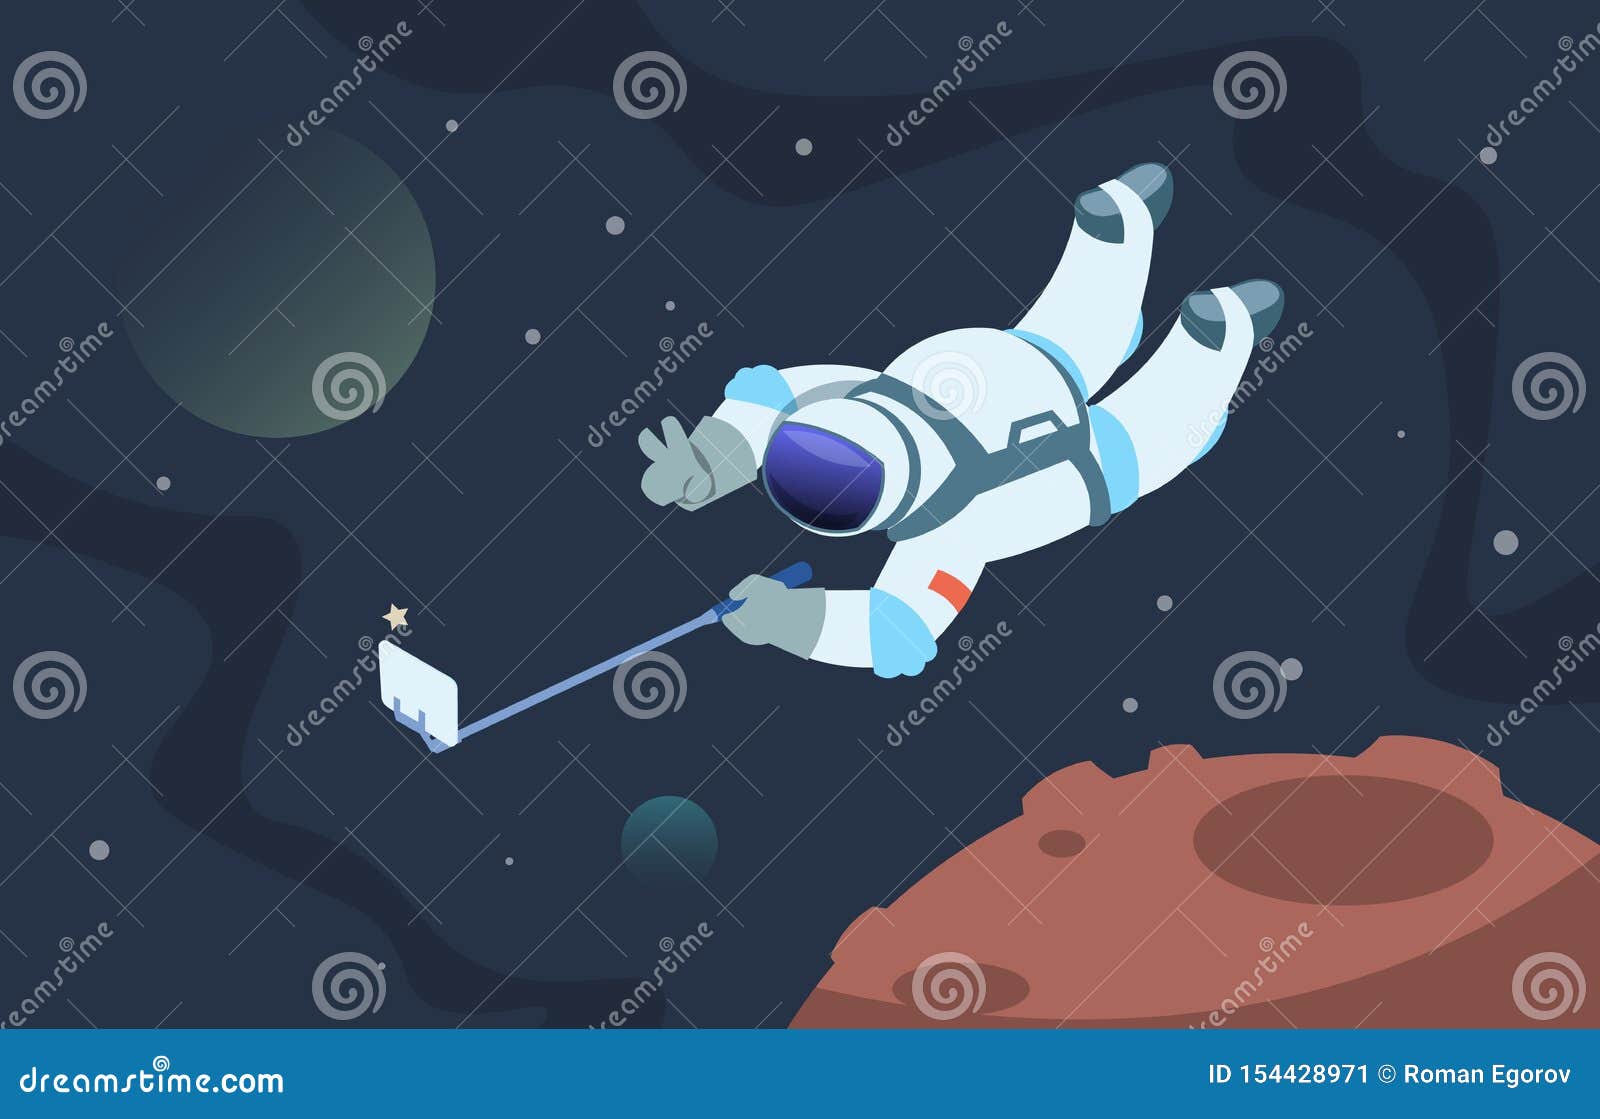 selfie astronaut. fanny cosmonaut taking photos in space on smartphone.  cartoon cute spaceman poster